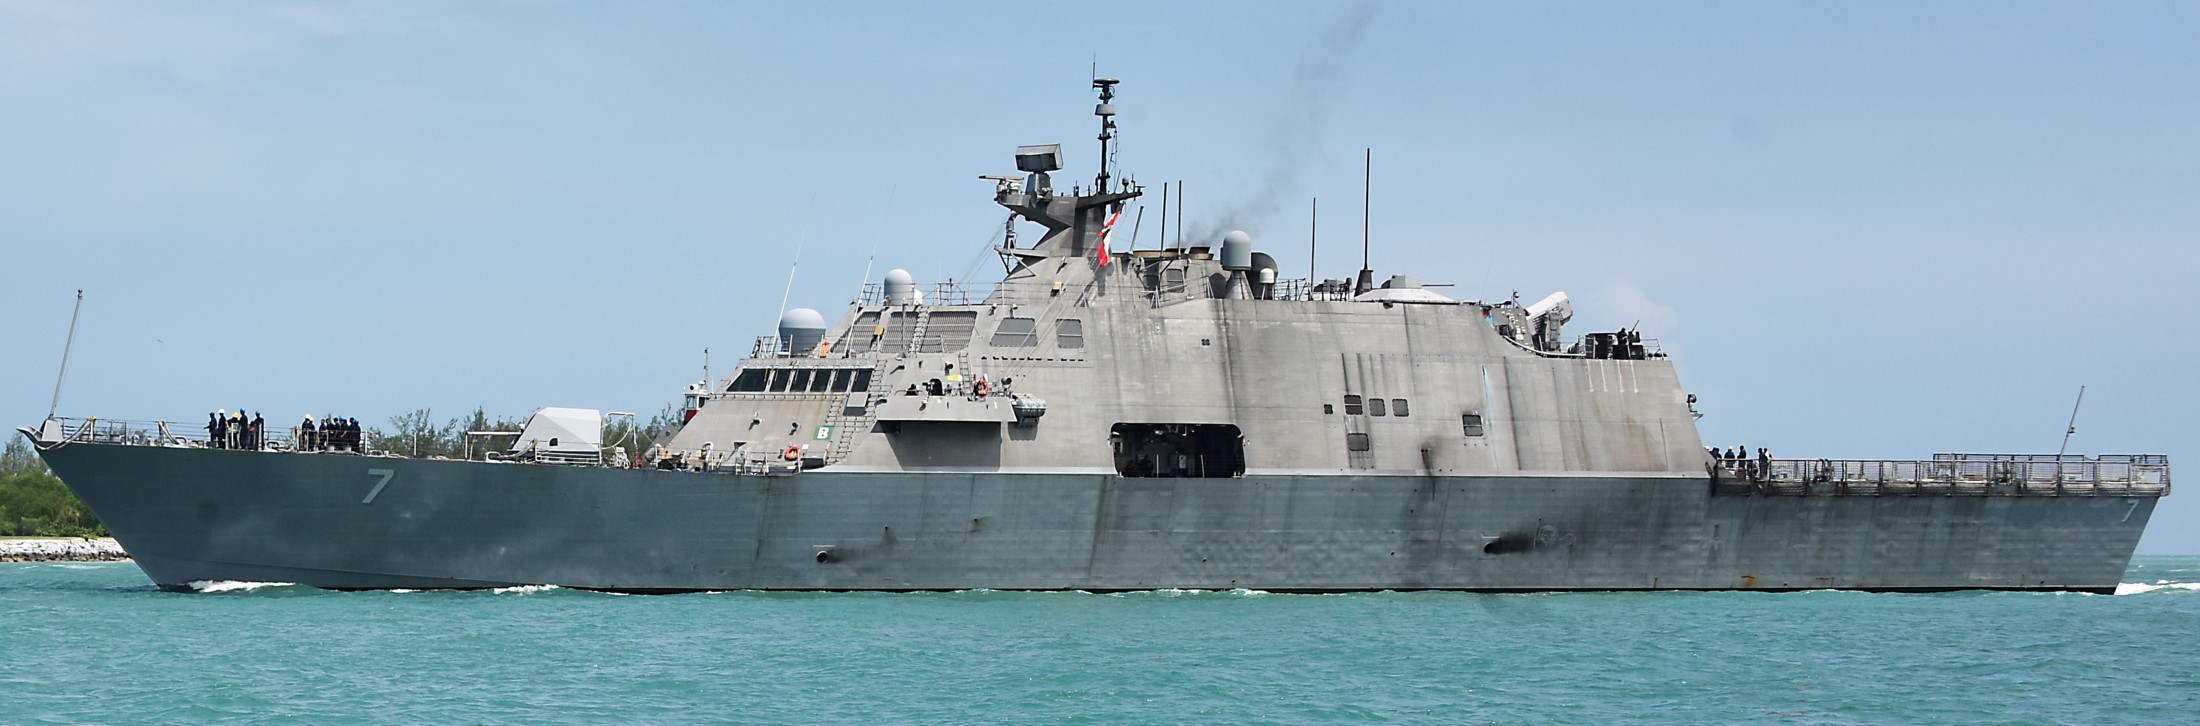 lcs-7 uss detroit freedom class littoral combat ship us navy 56 key west florida